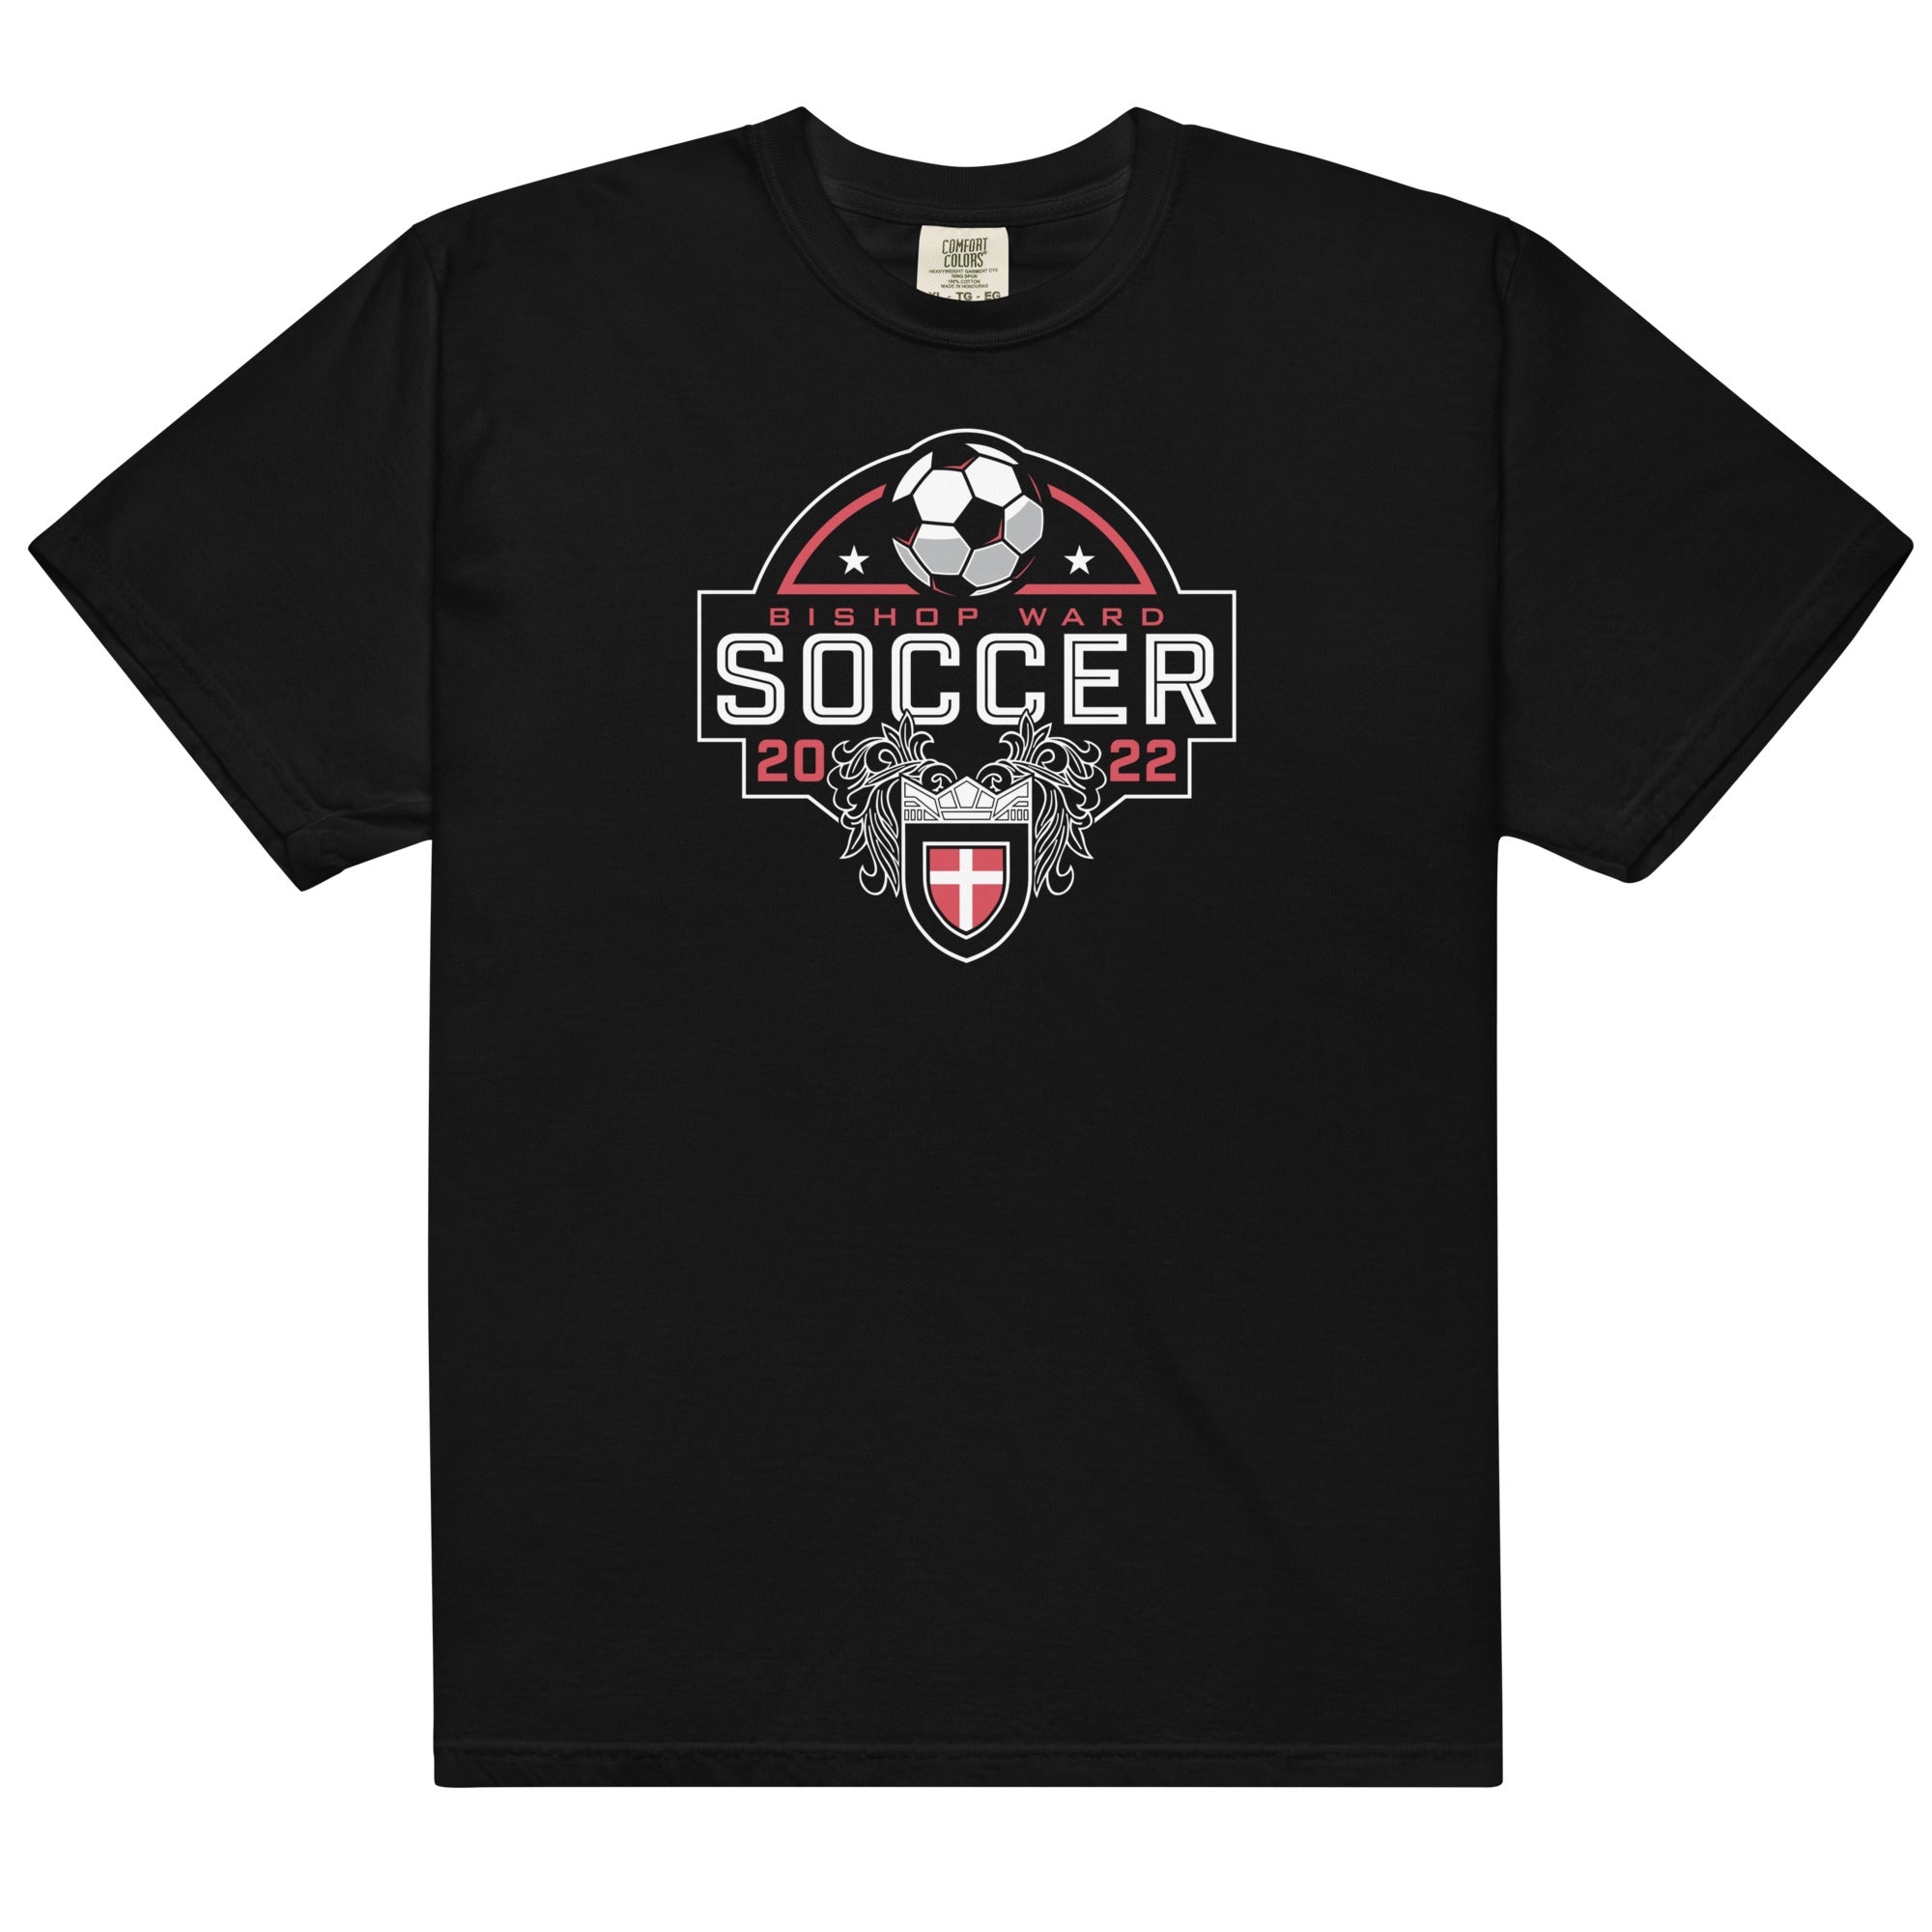 Bishop Ward Soccer Mens Garment-Dyed Heavyweight T-Shirt